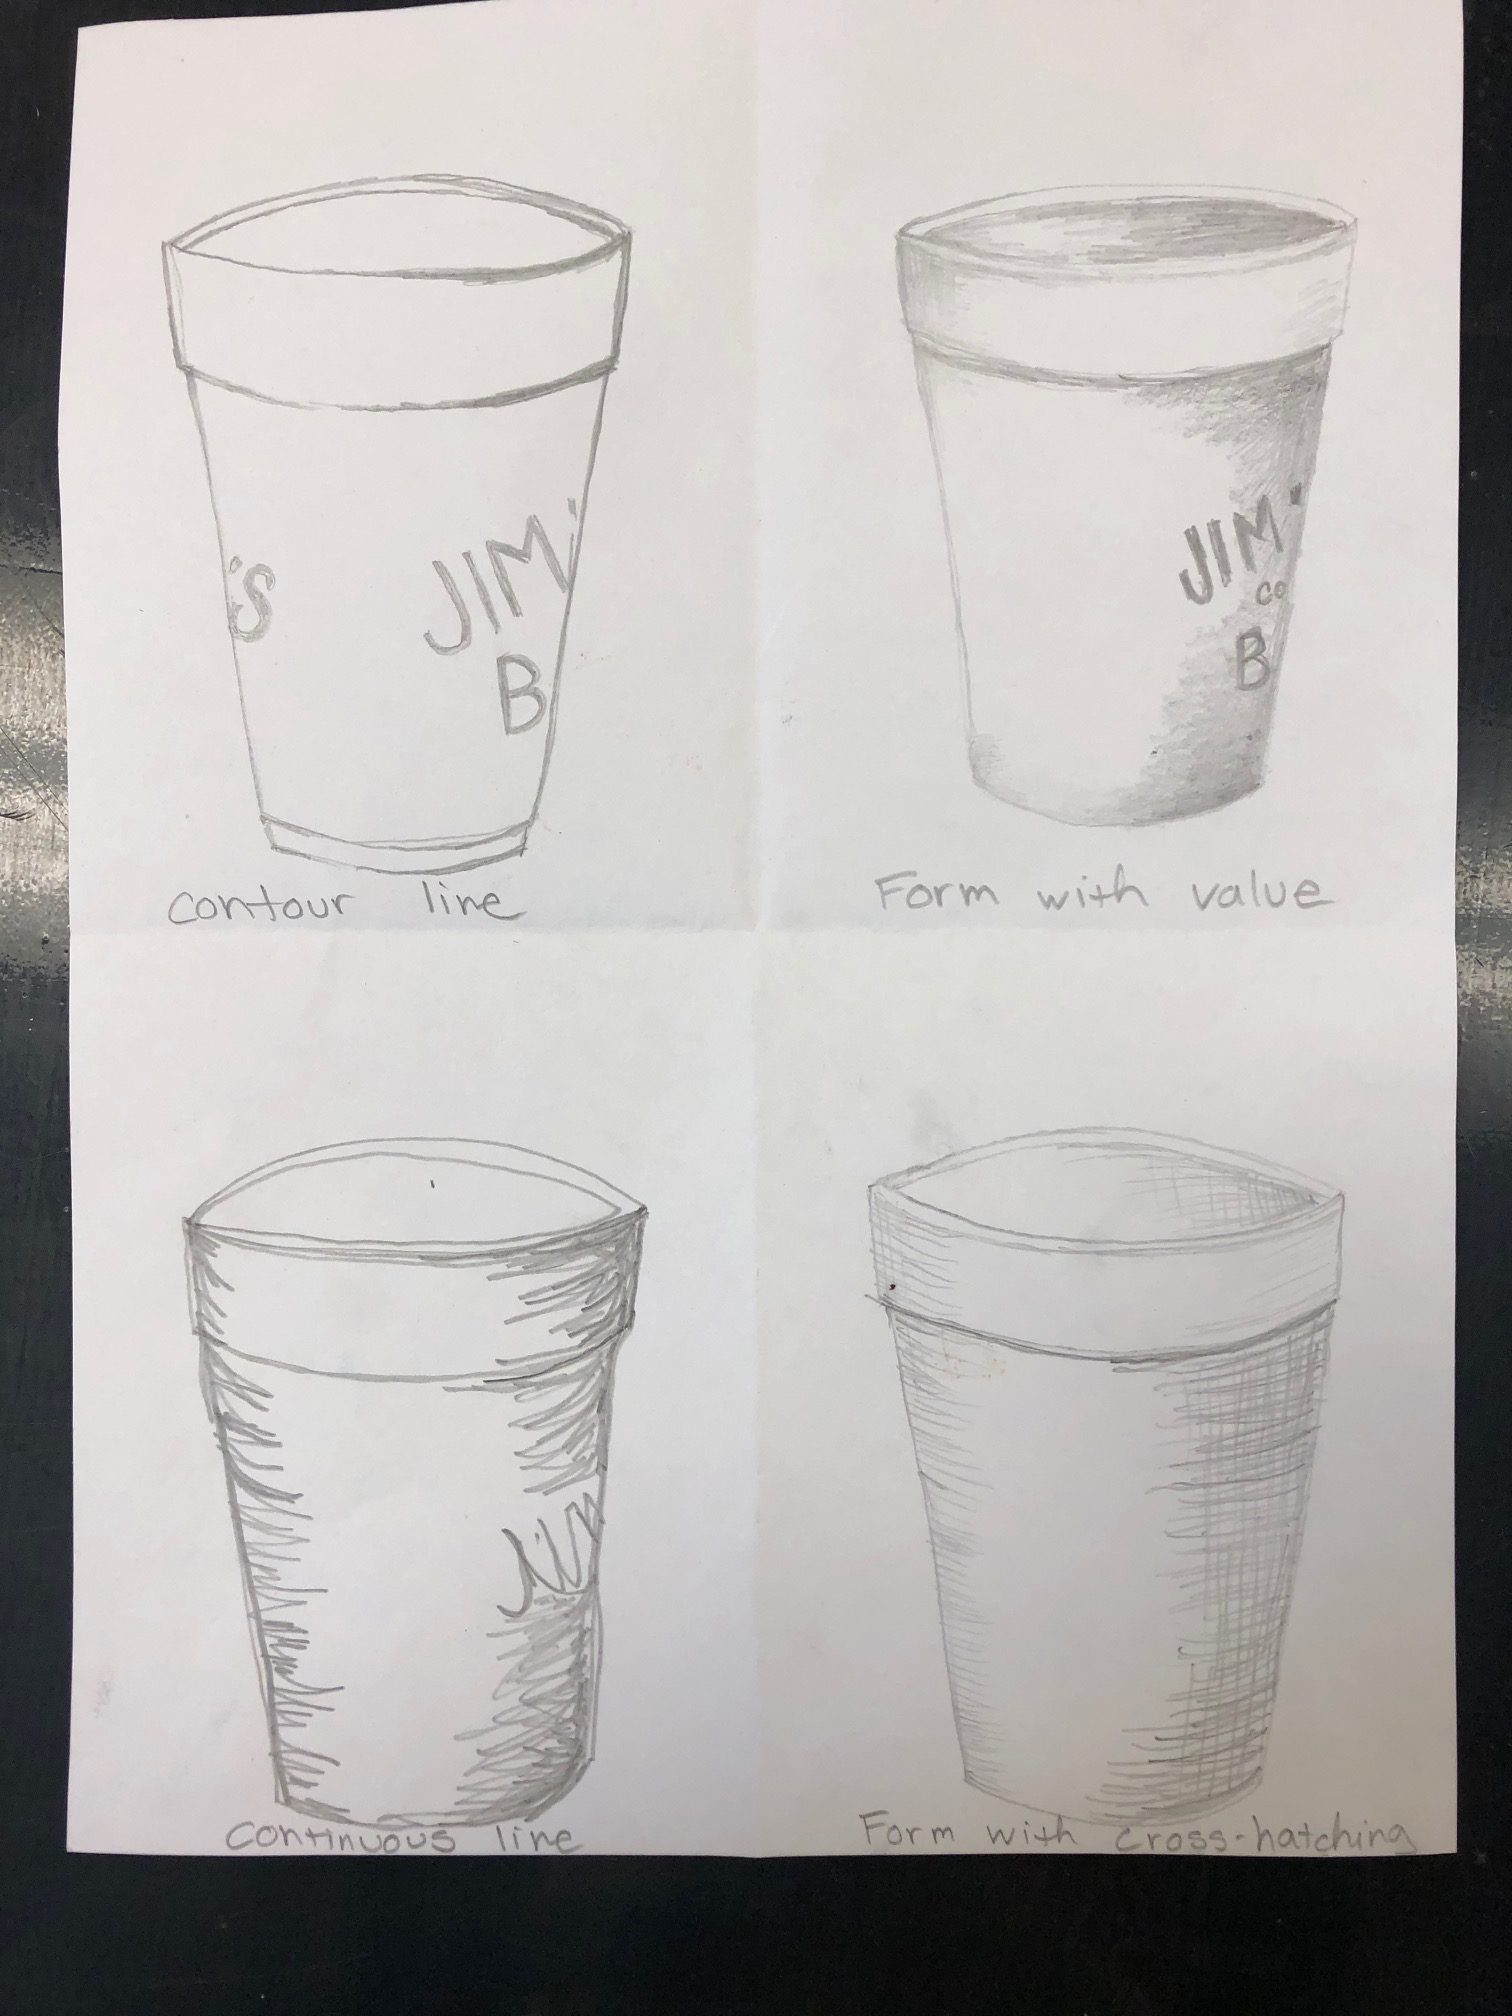 Coffee mug drawing Vectors & Illustrations for Free Download | Freepik